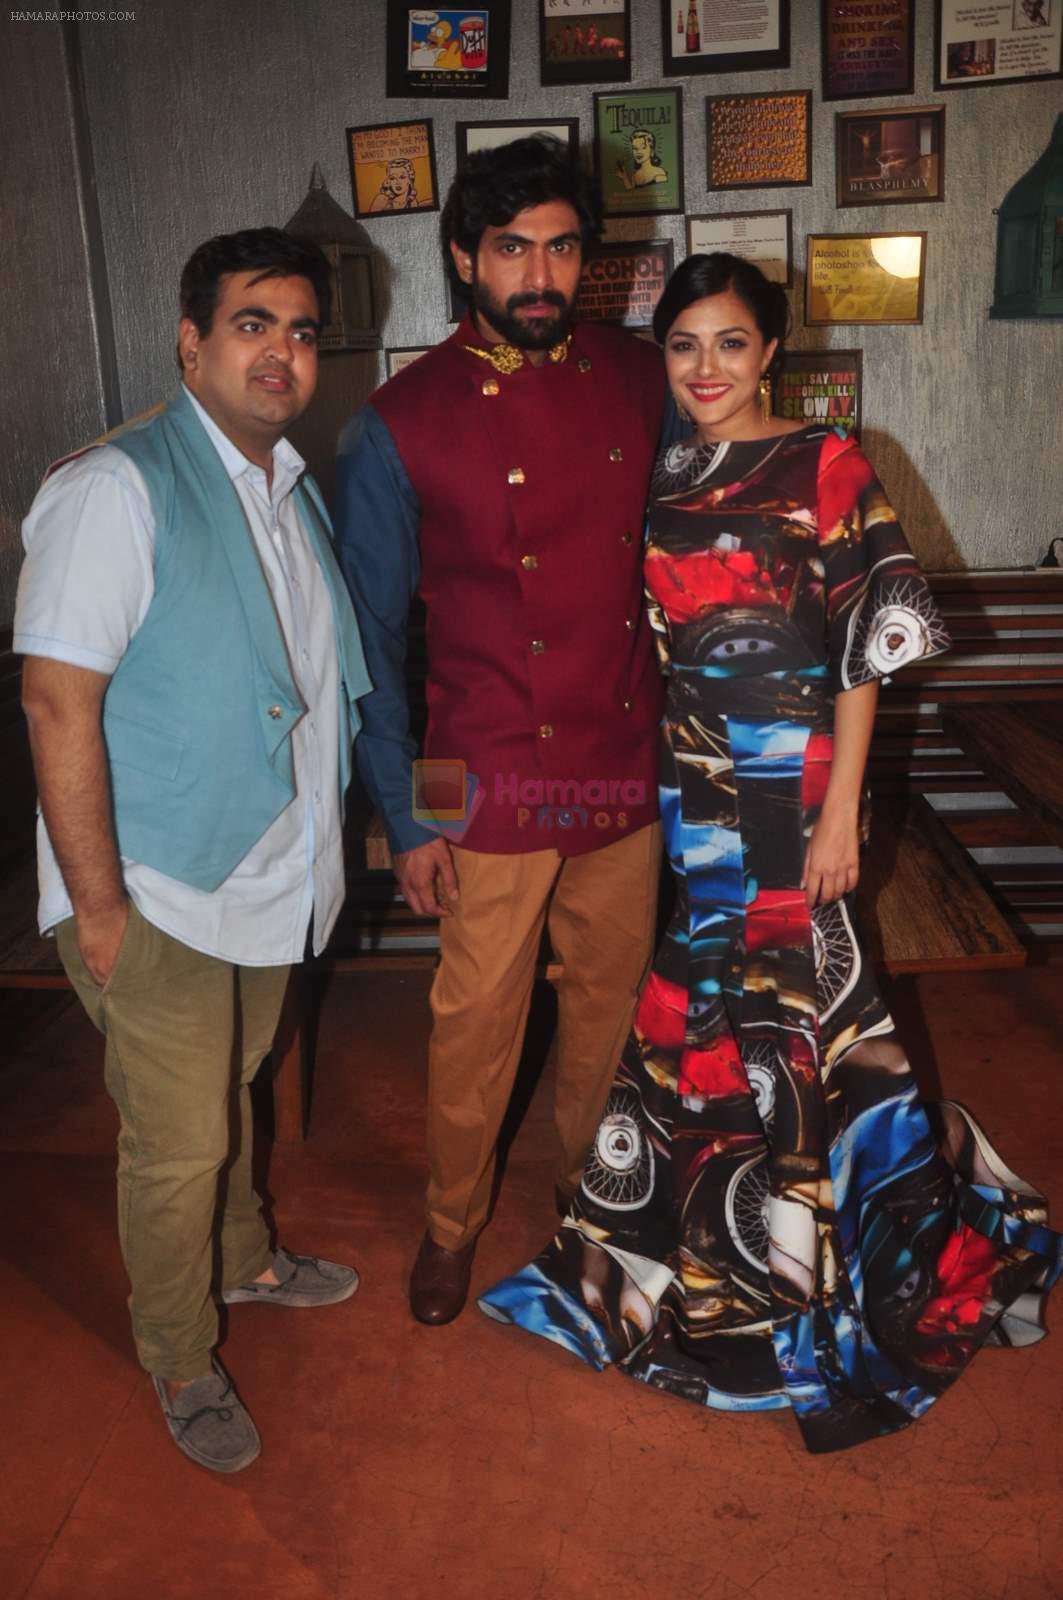 Rana Daggubati was dressed for copa Shoot by Designer Kunal Anil Tanna in Juhu, Mumbai on 15th March 2015